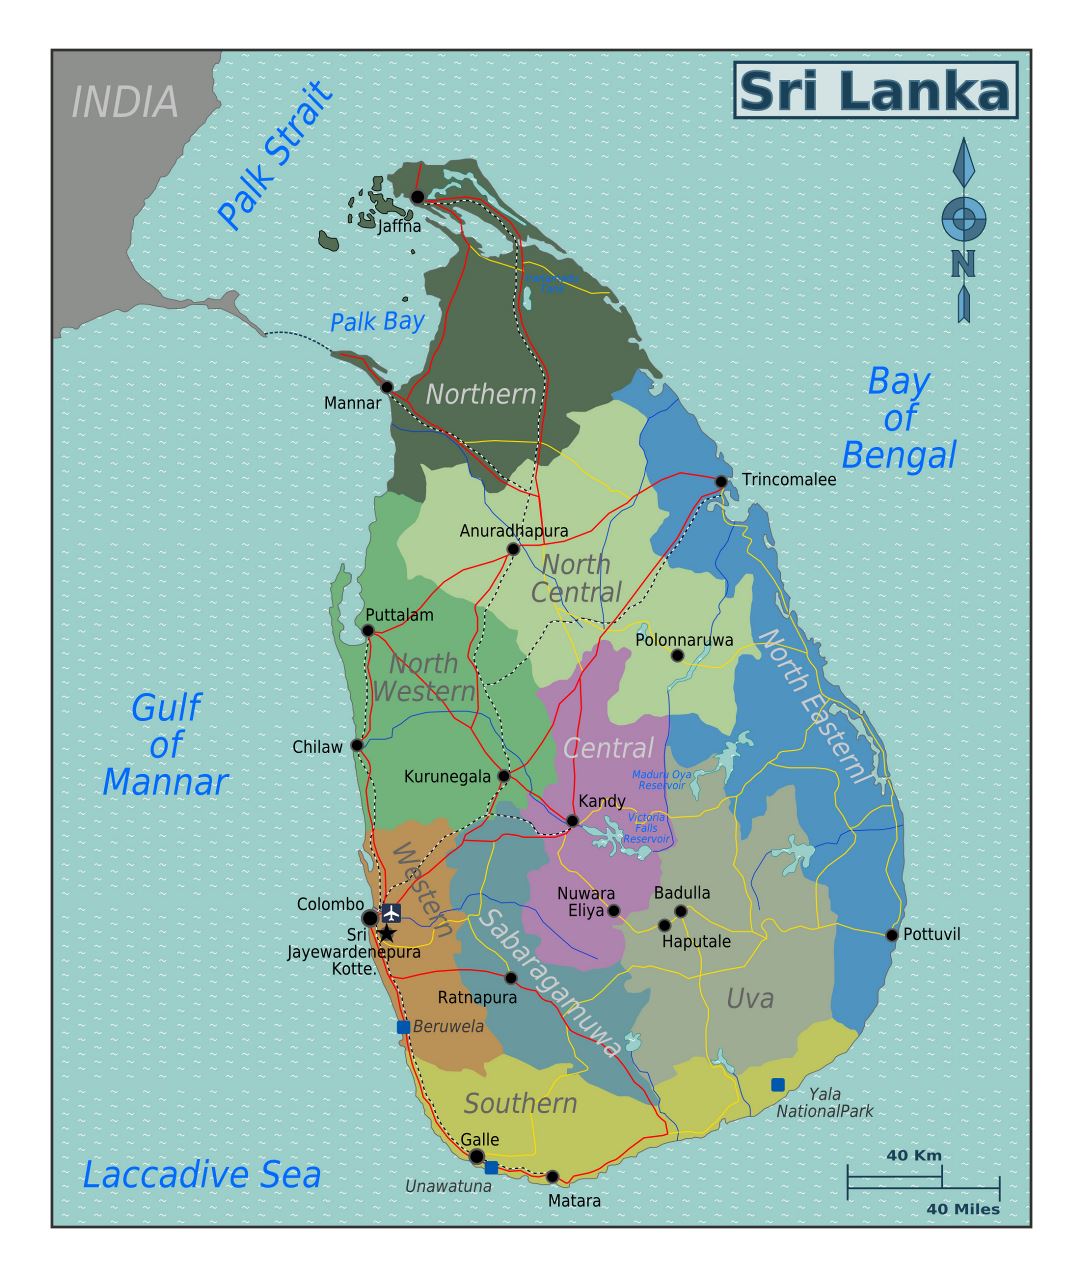 Large regions map of Sri Lanka